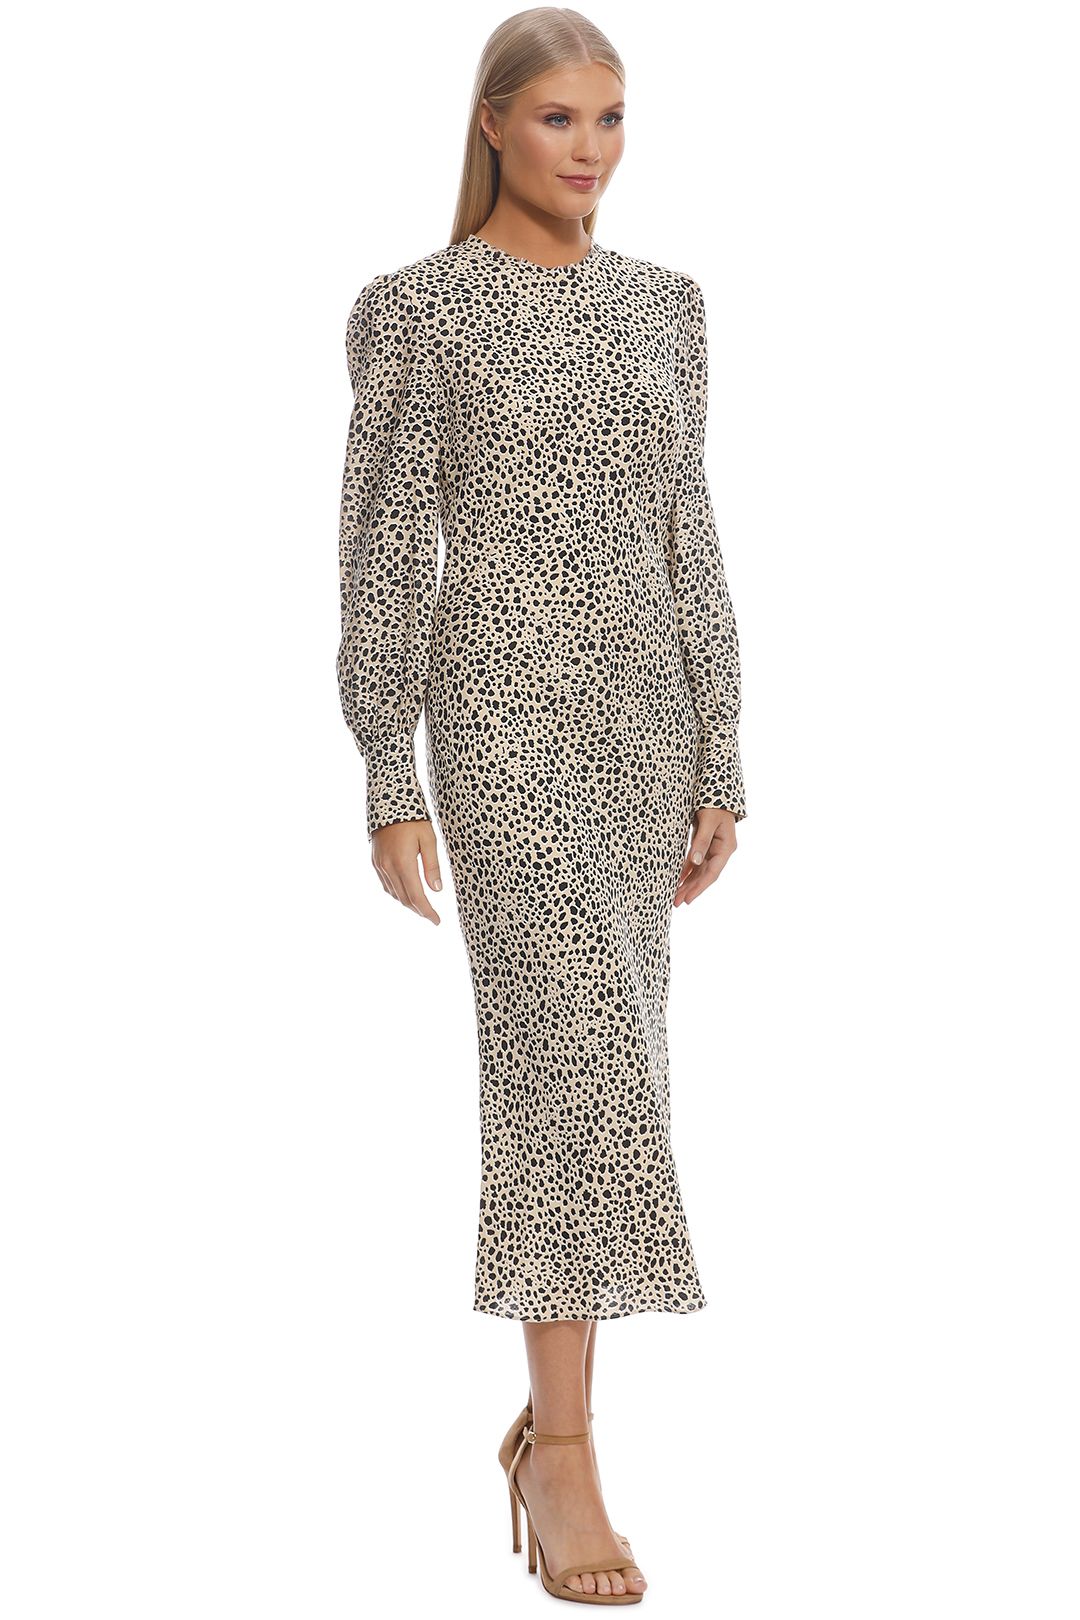 Rebecca Vallance - Anya Dress - Leopard Print - Side